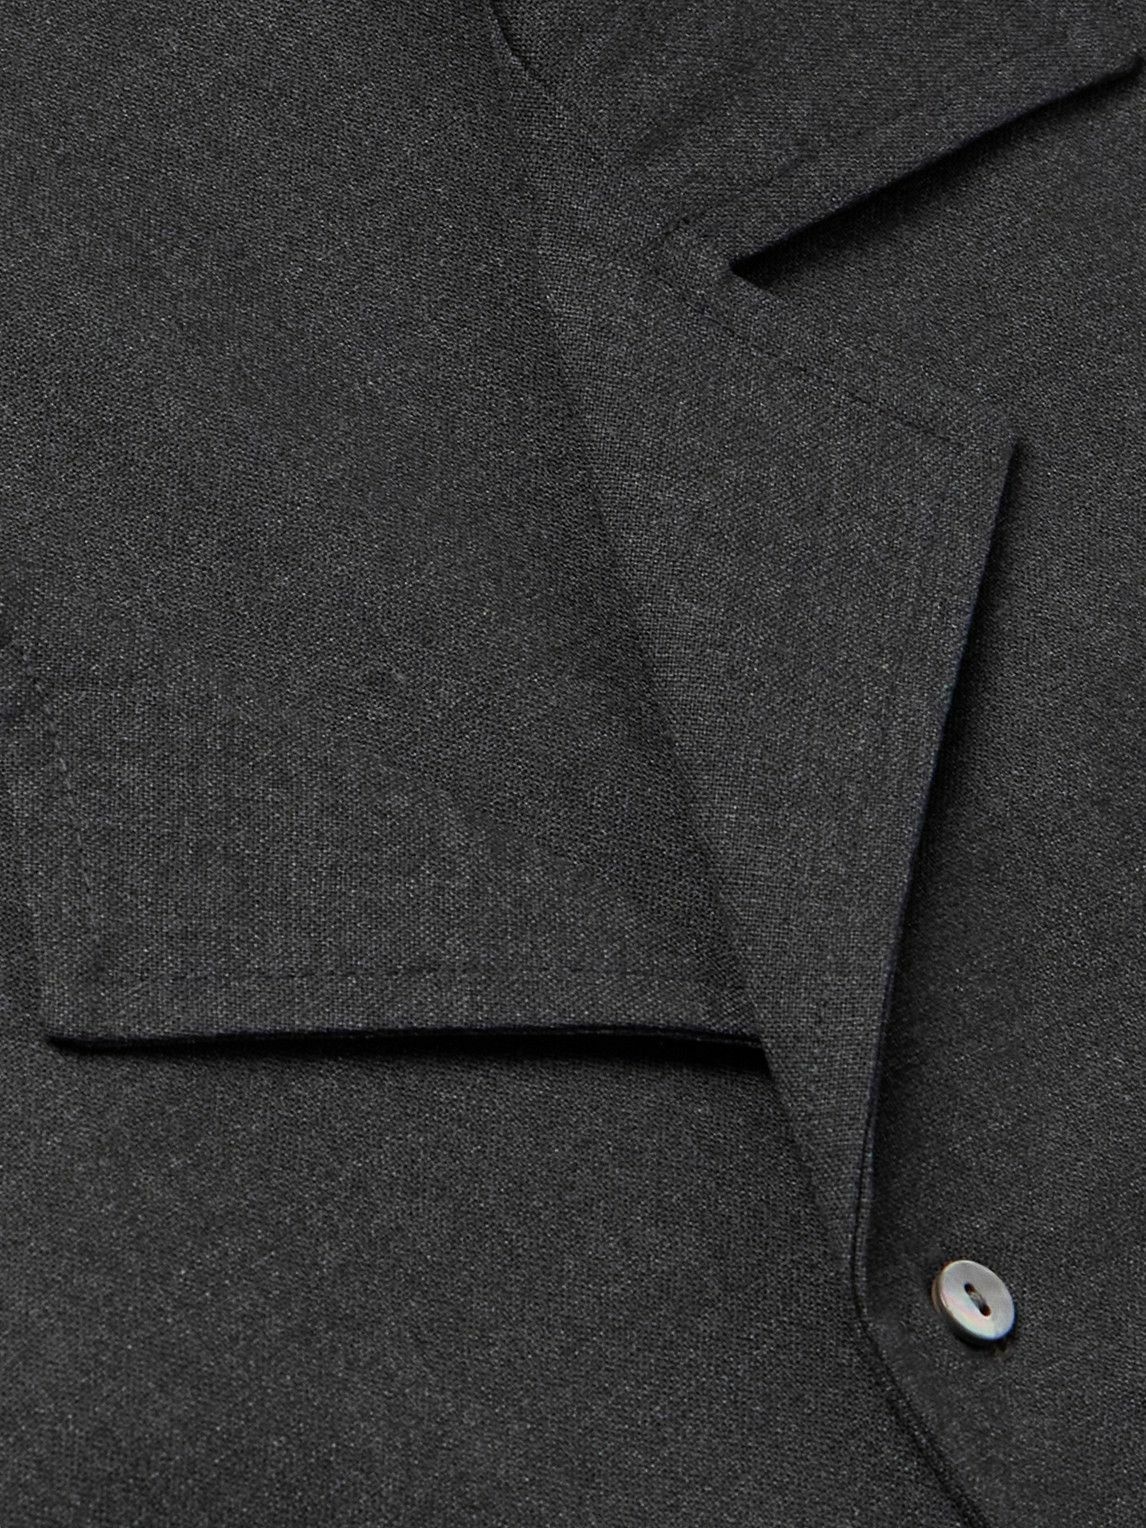 Stòffa - Wool Overshirt - Gray STÒFFA